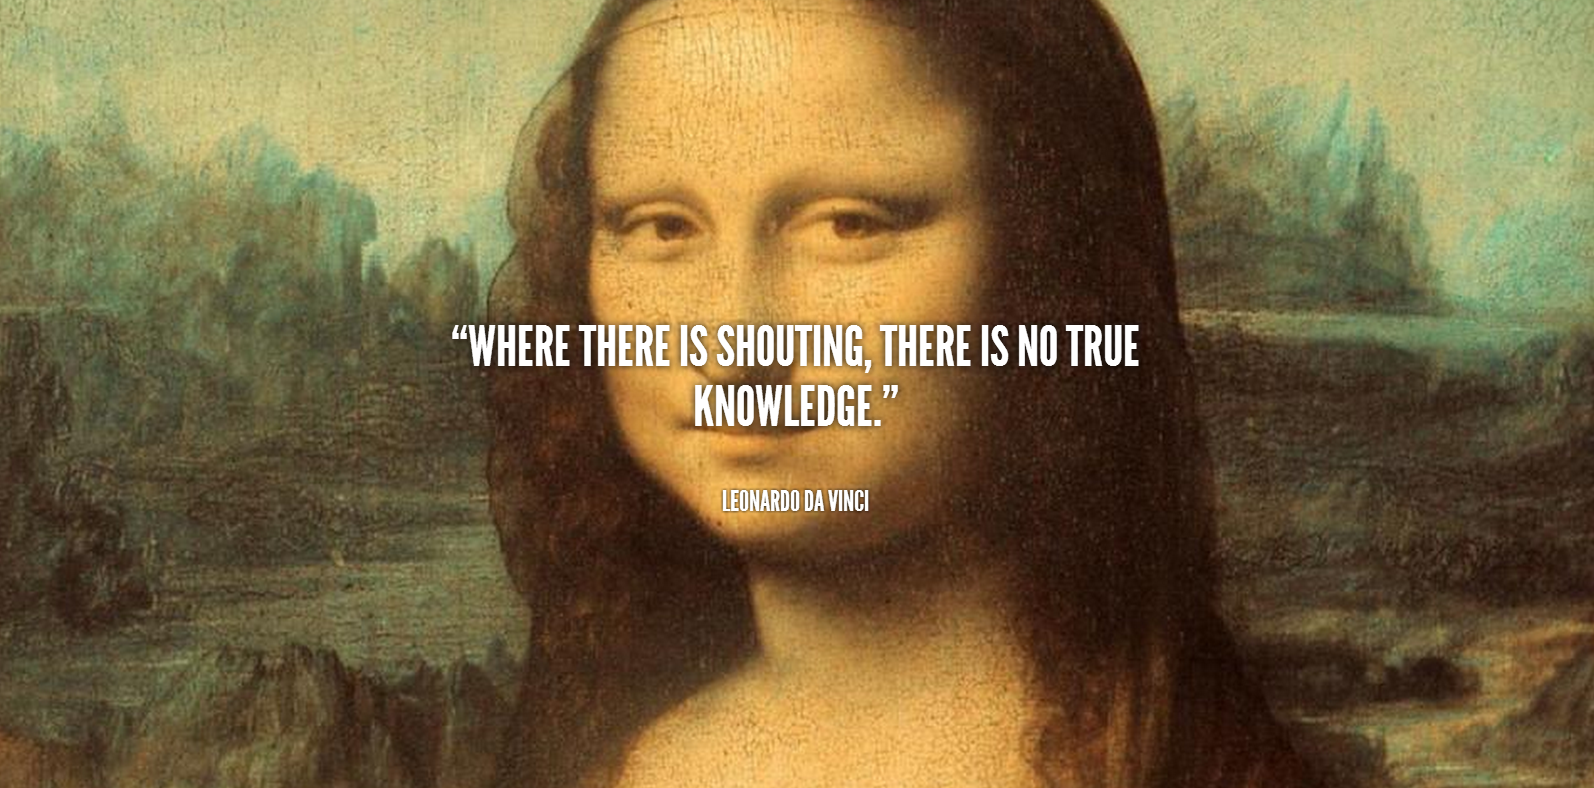 Where there is shouting, there is no true knowledge. Leonardo da Vinci #quotes